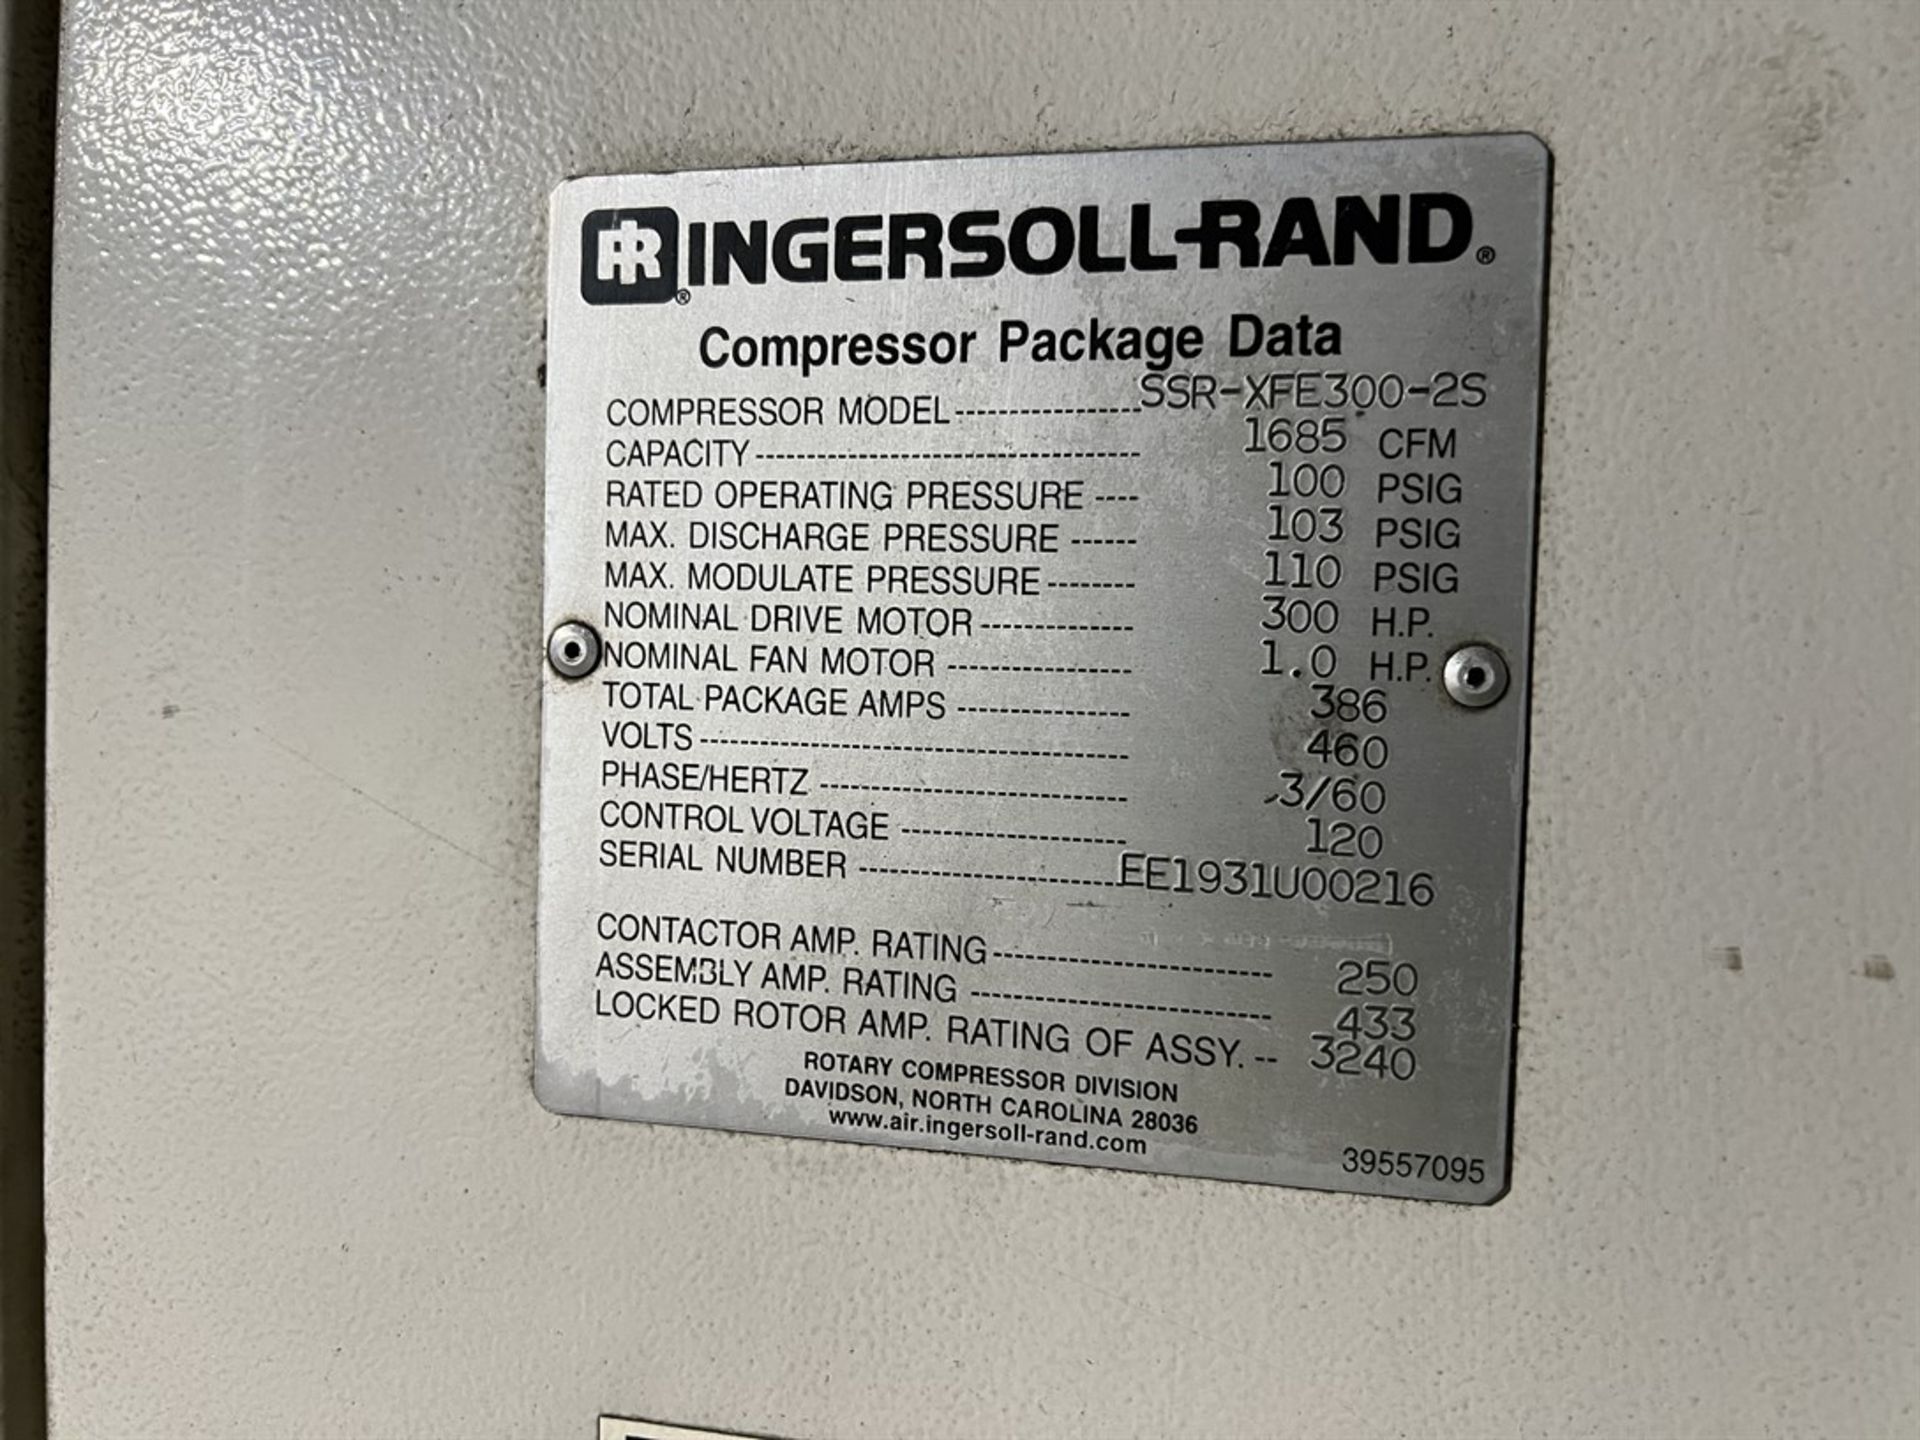 INGERSOLL RAND SSR-XFE300-2S 300 HP Rotary Screw Air Compressor, s/n EE1931U00216, 1695 CFM, 100 CFM - Image 4 of 4